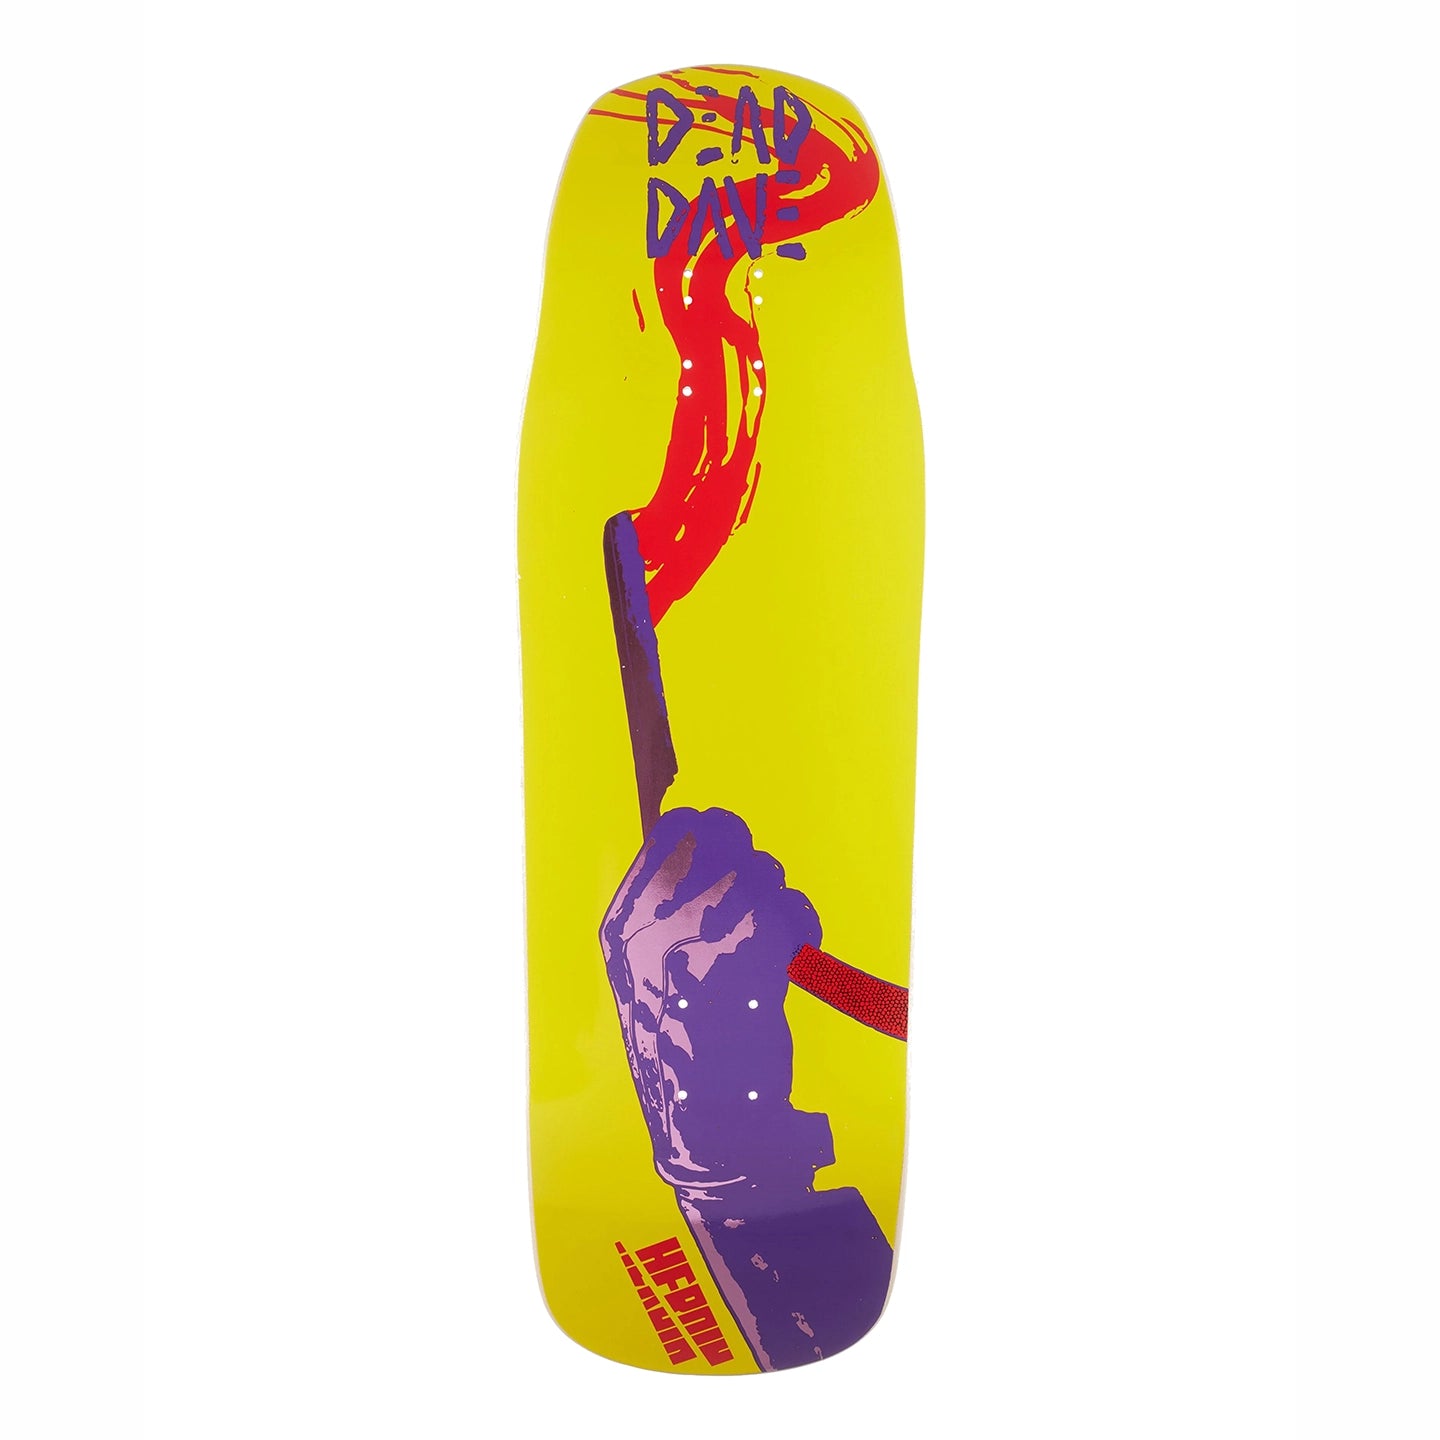 Heroin Dead Dave Giallo 9.75" Shaped Skateboard Deck